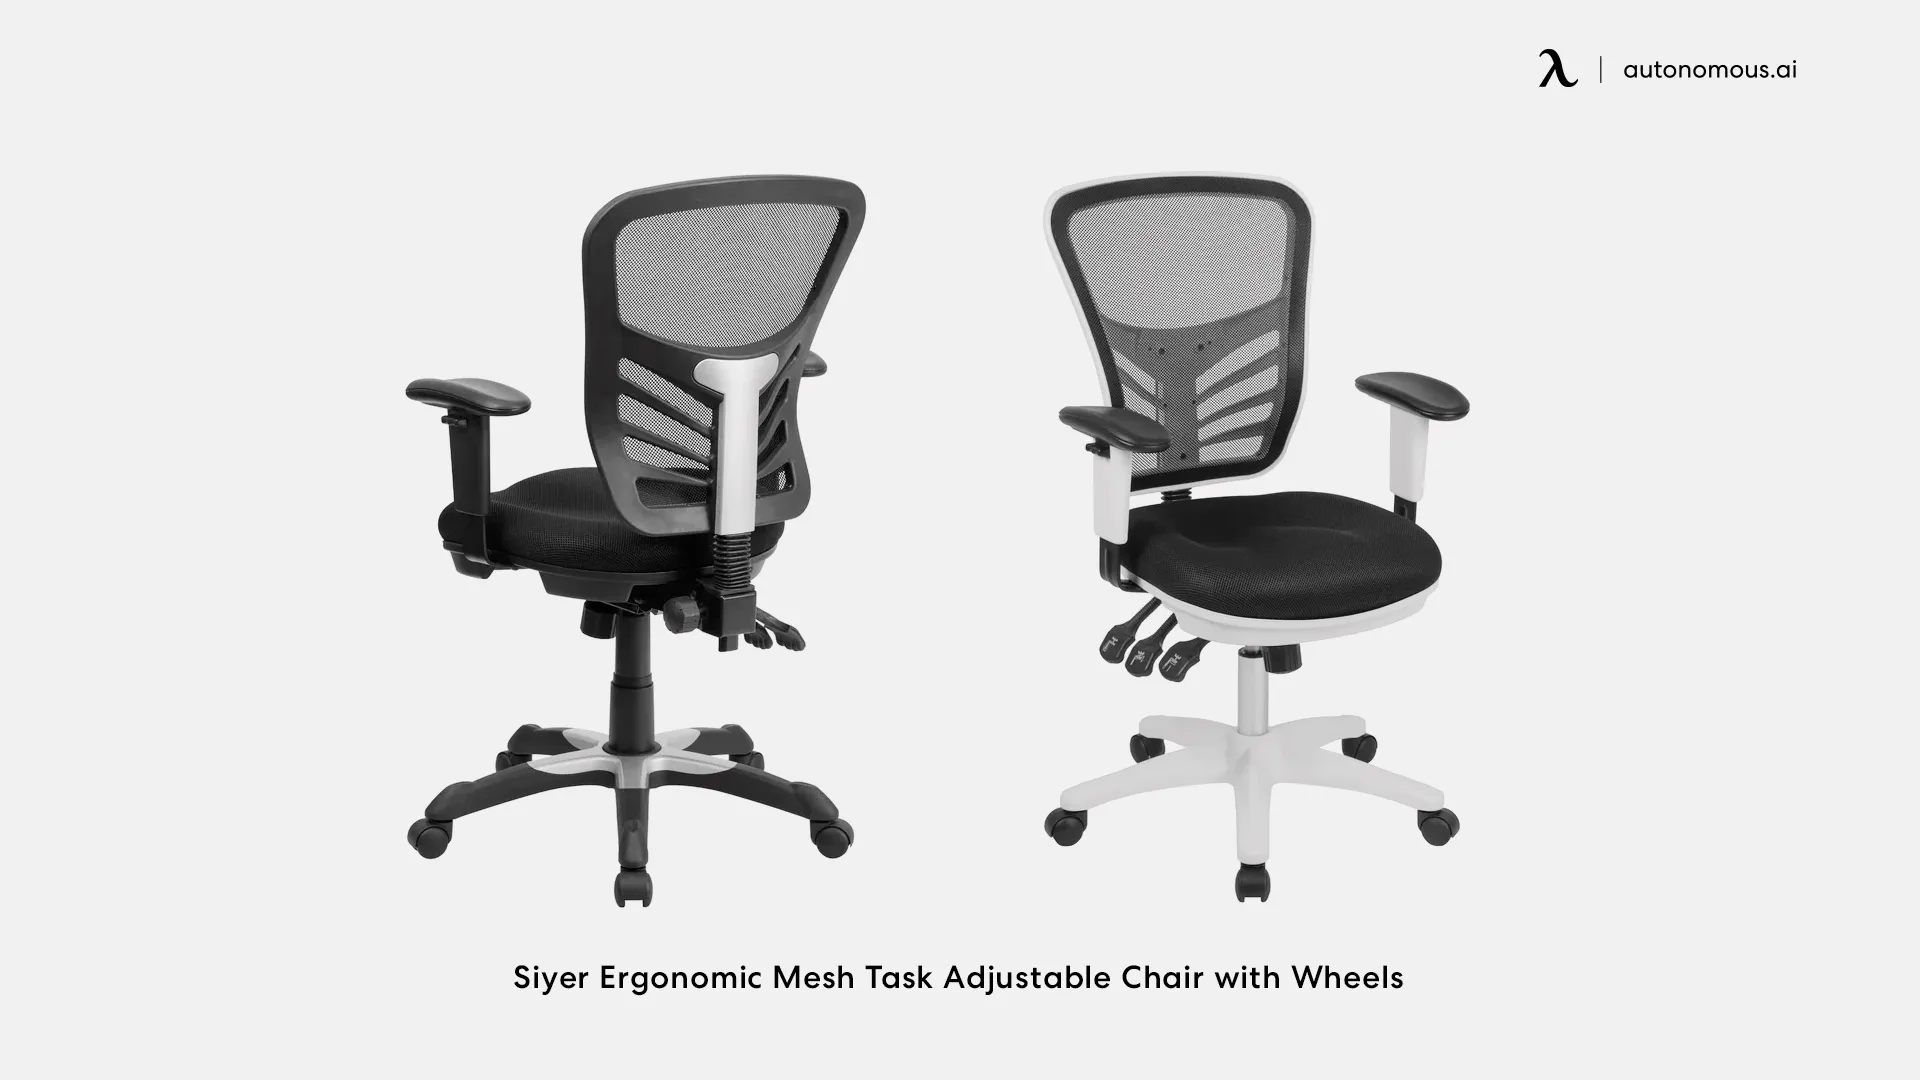 Siyer Ergonomic Mesh Task Adjustable Chair with Wheels